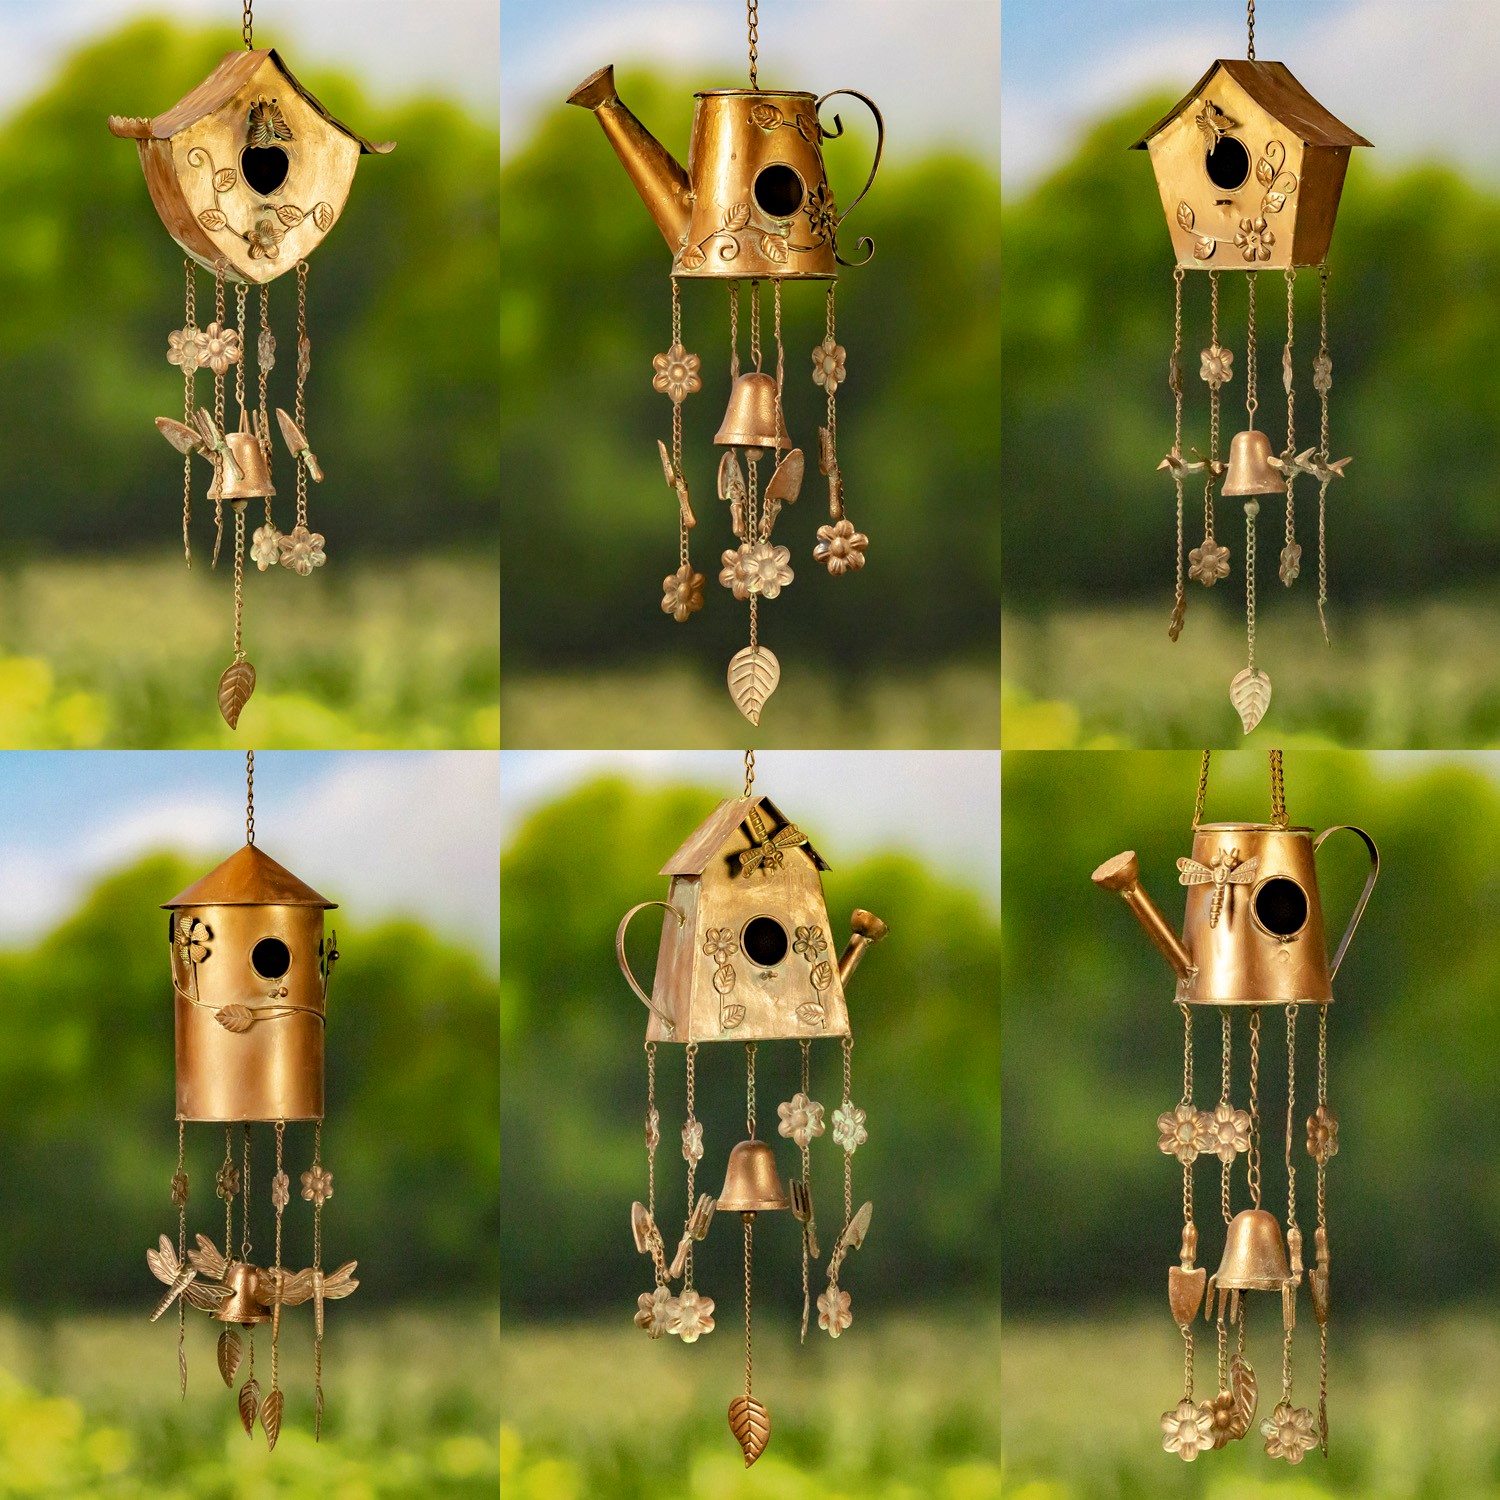 Zaer Ltd. International Set of 6 Assorted Style Hanging Antique Copper Color Birdhouse Wind Chimes LS132817